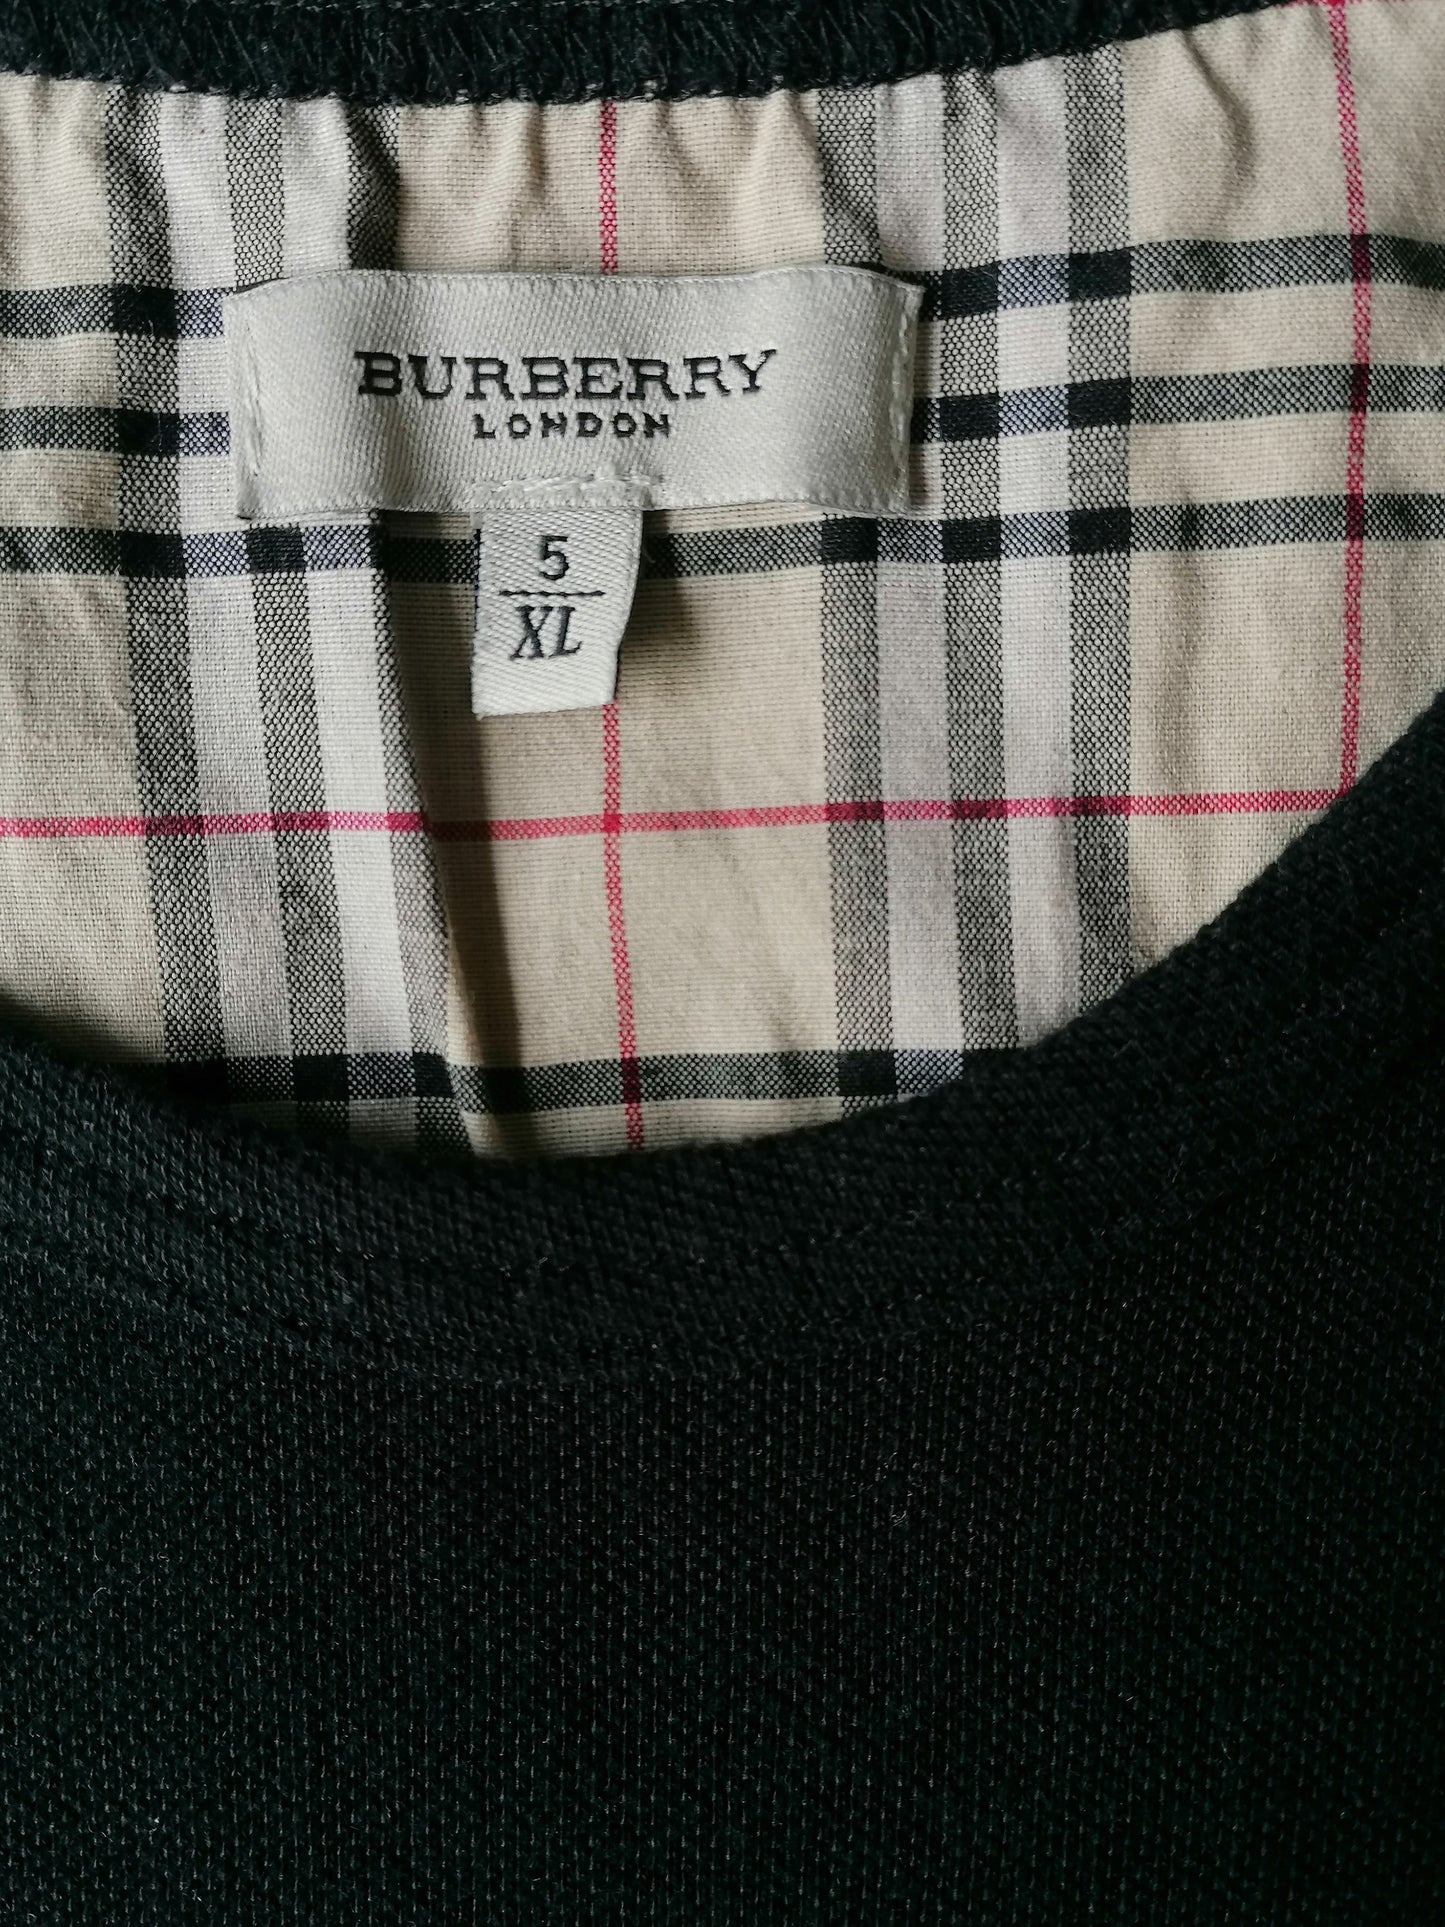 Vintage Burberry Cotton Spencer. Black colored. Size XL.